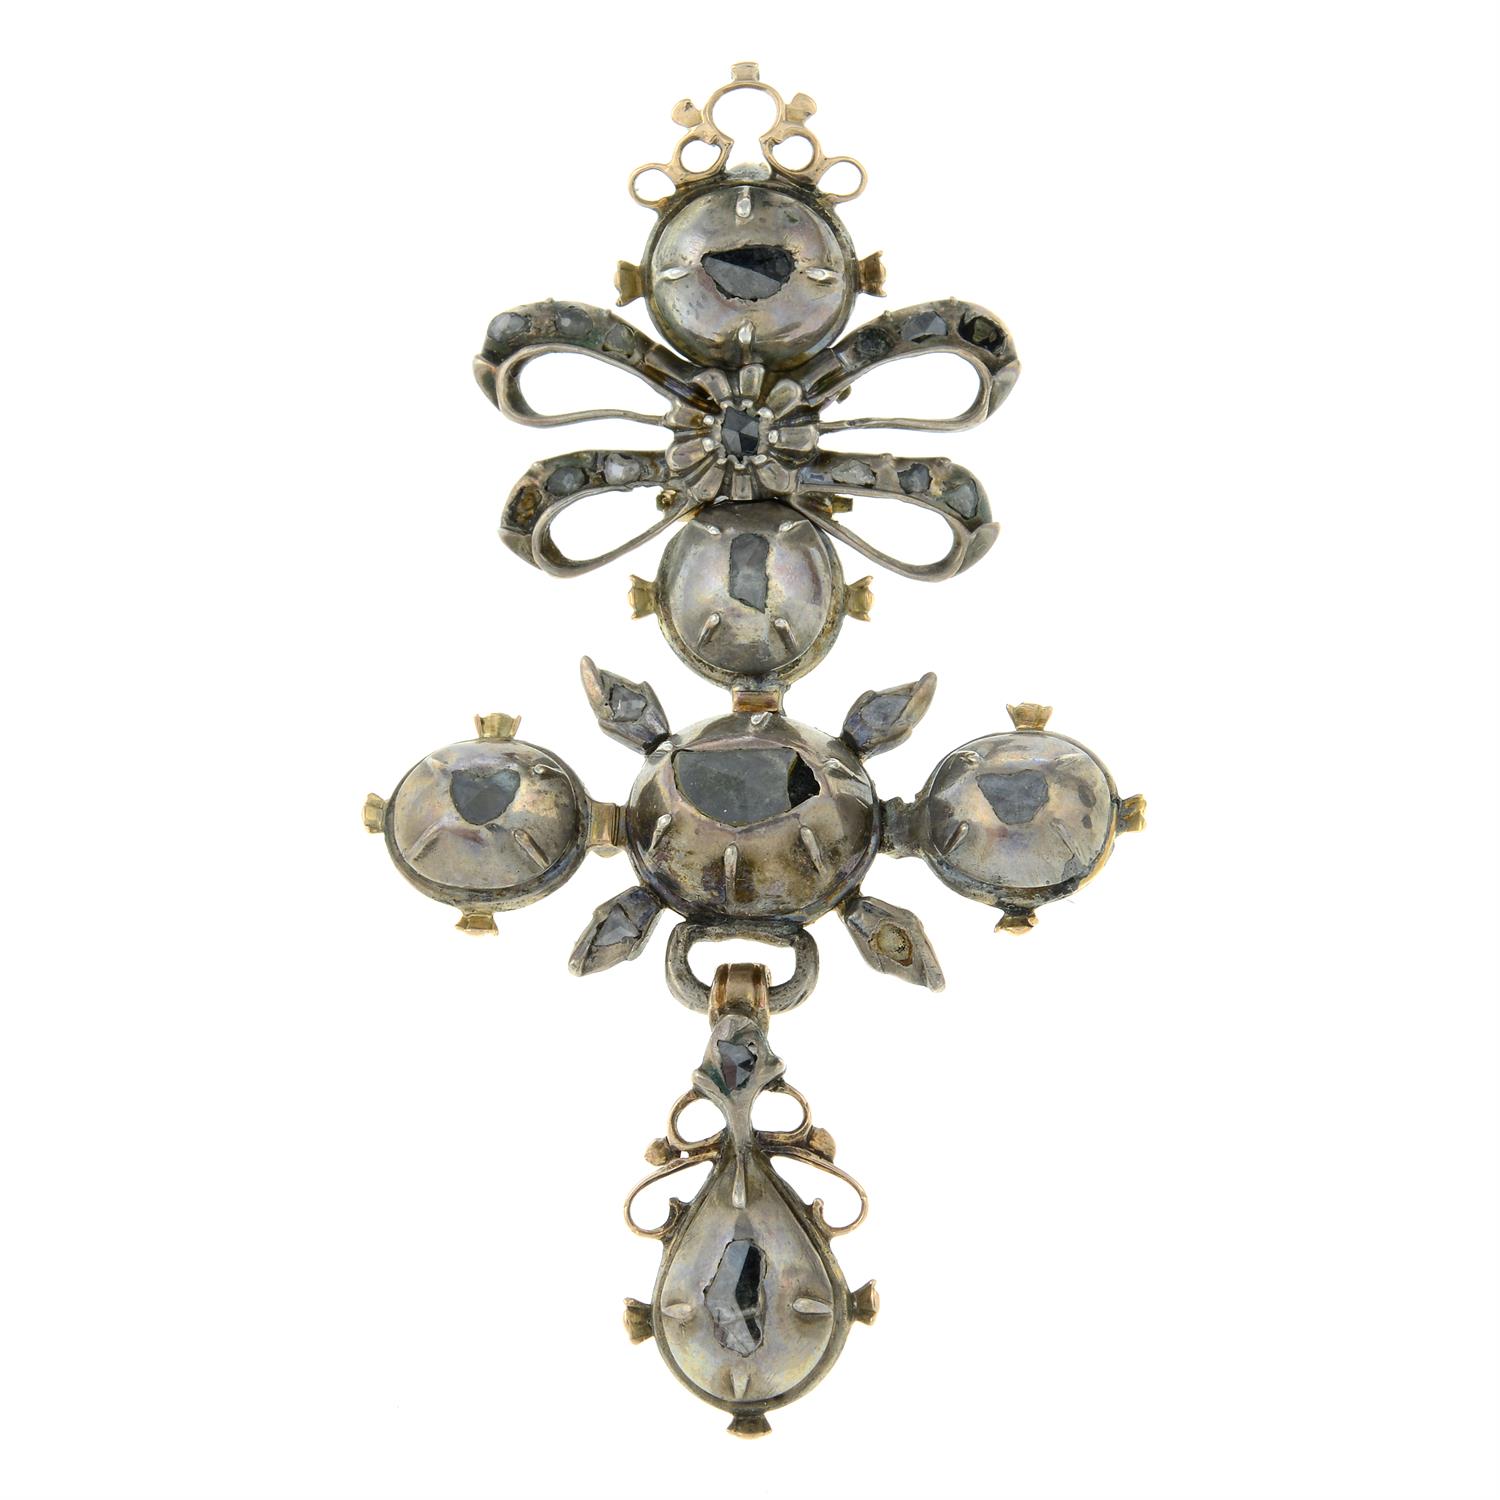 An Iberian 18th century silver and gold rose-cut diamond pendant.